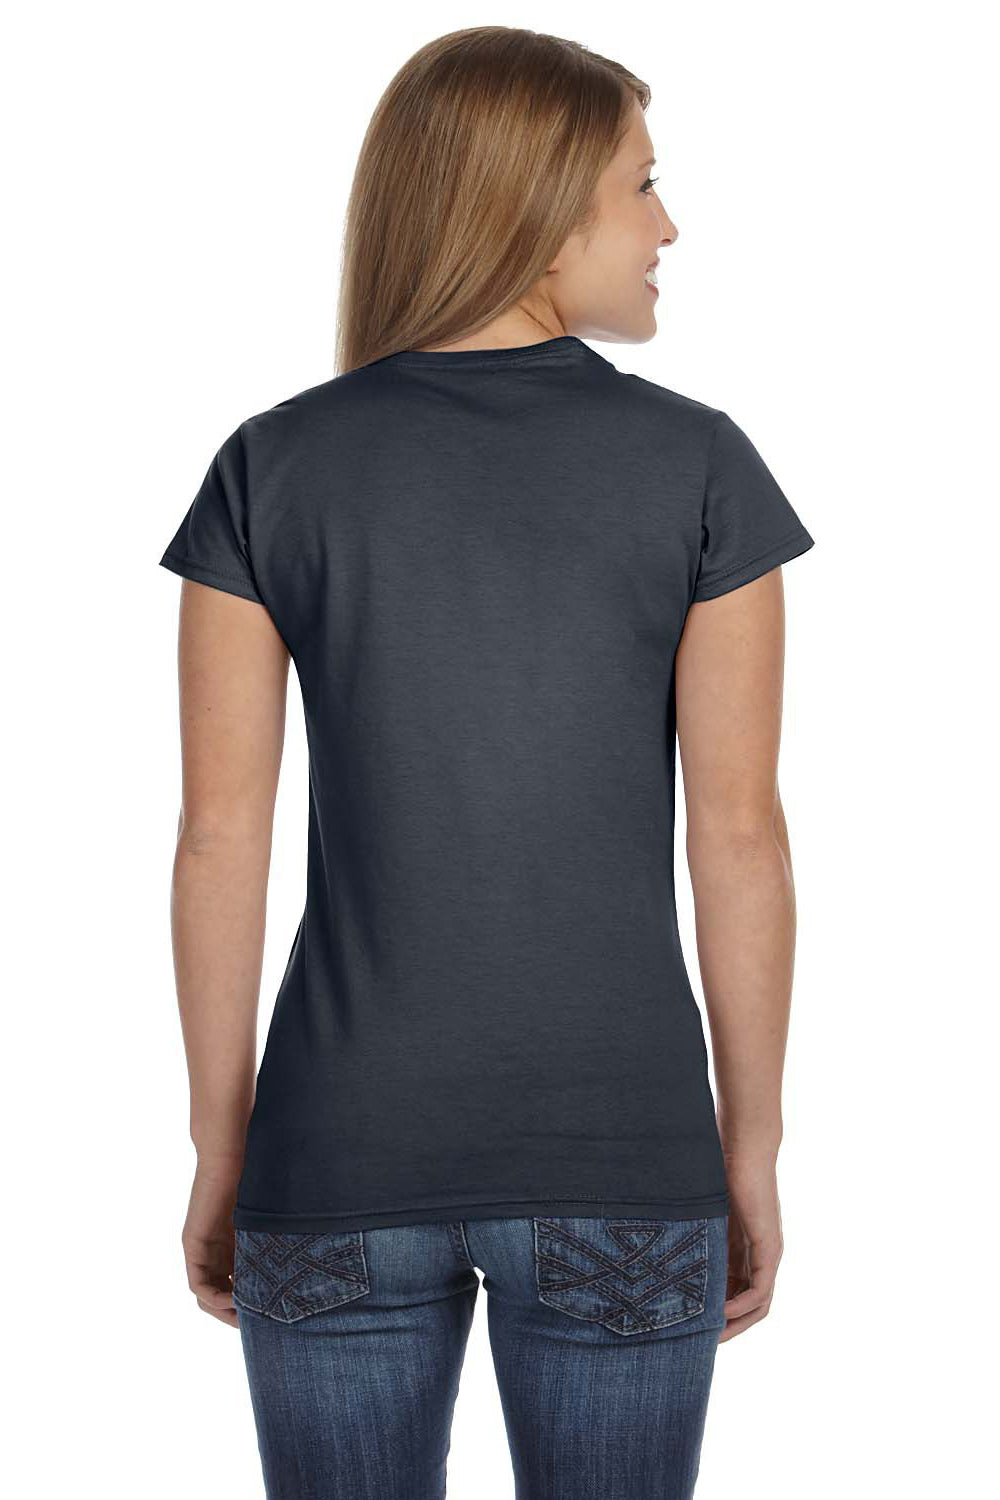 Gildan G640L Womens Softstyle Short Sleeve Crewneck T-Shirt Charcoal Grey Back